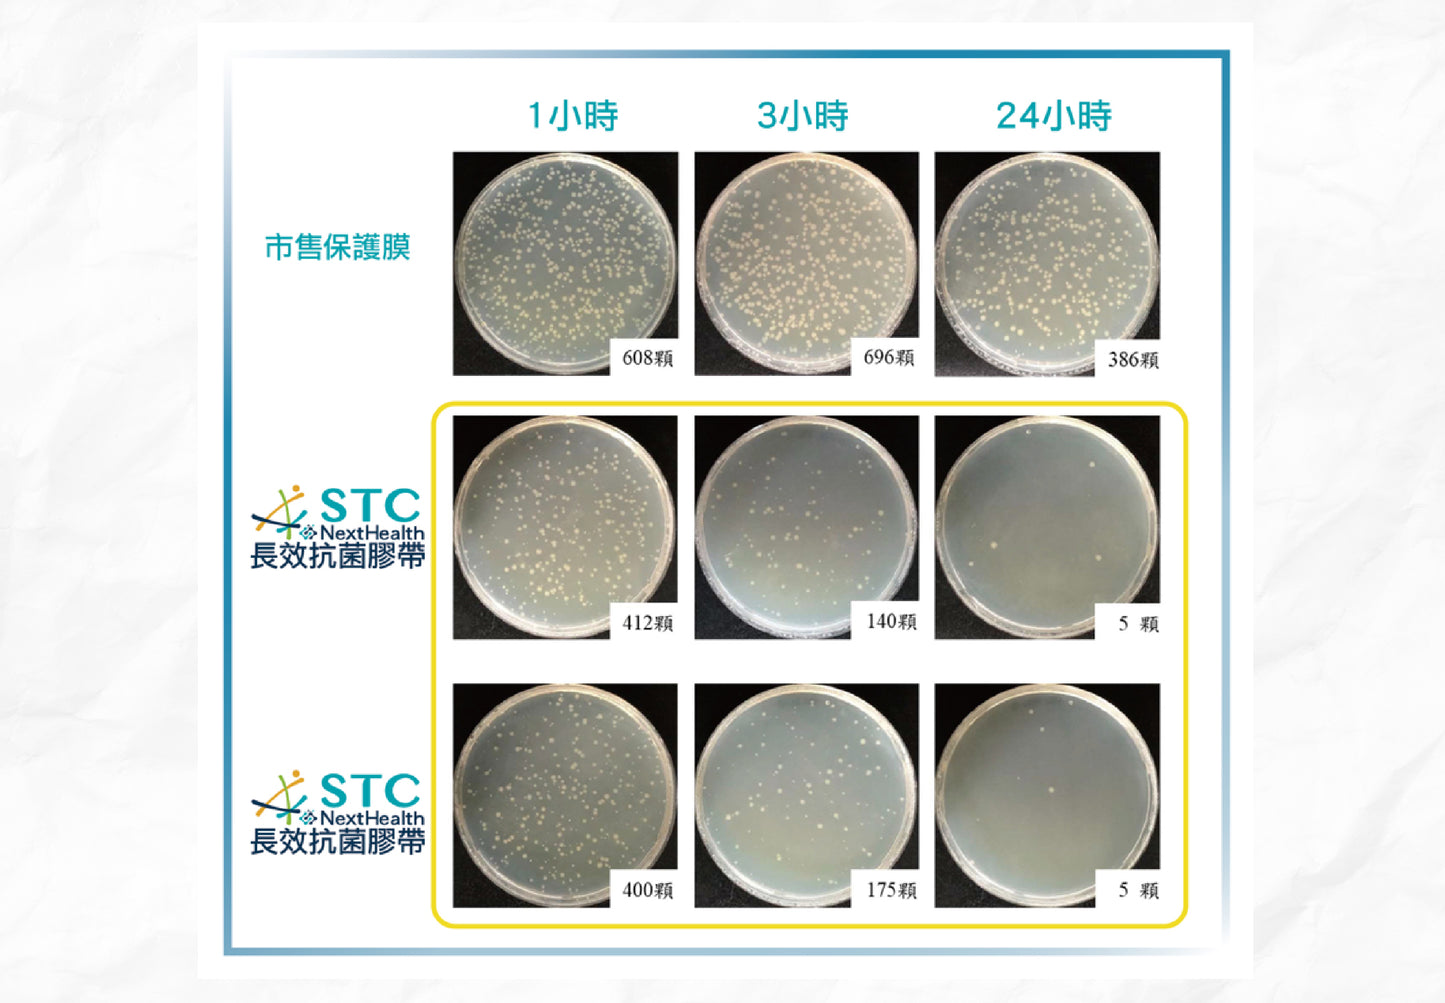 STC 長效抗菌氧化鋅膠帶10公分寬